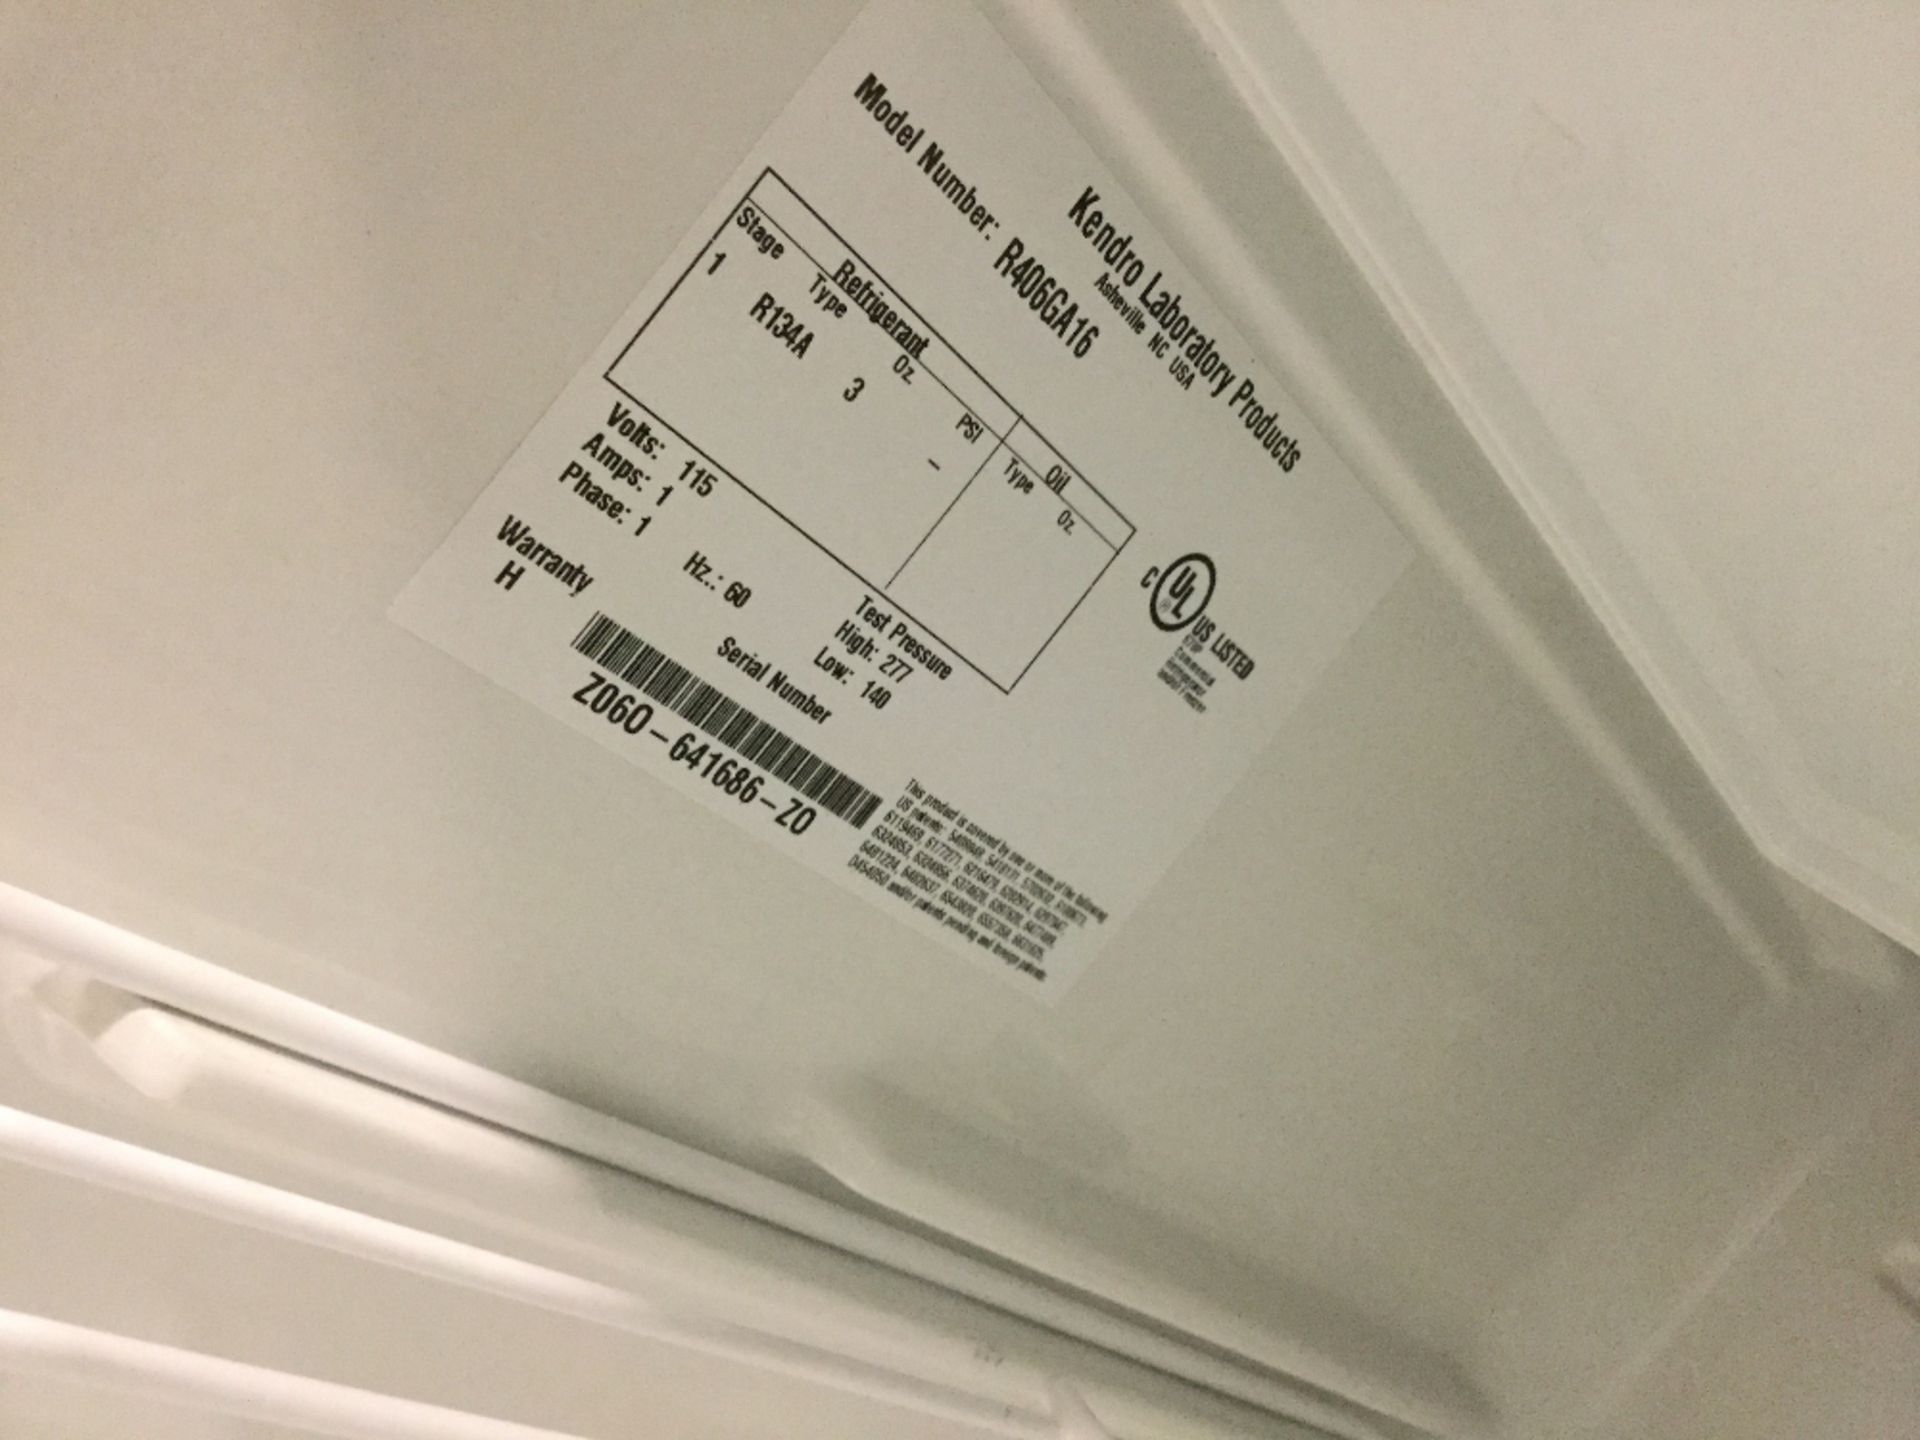 VWR Undercounter Laboratory Refrigerator/Freezer Combo - Image 2 of 3